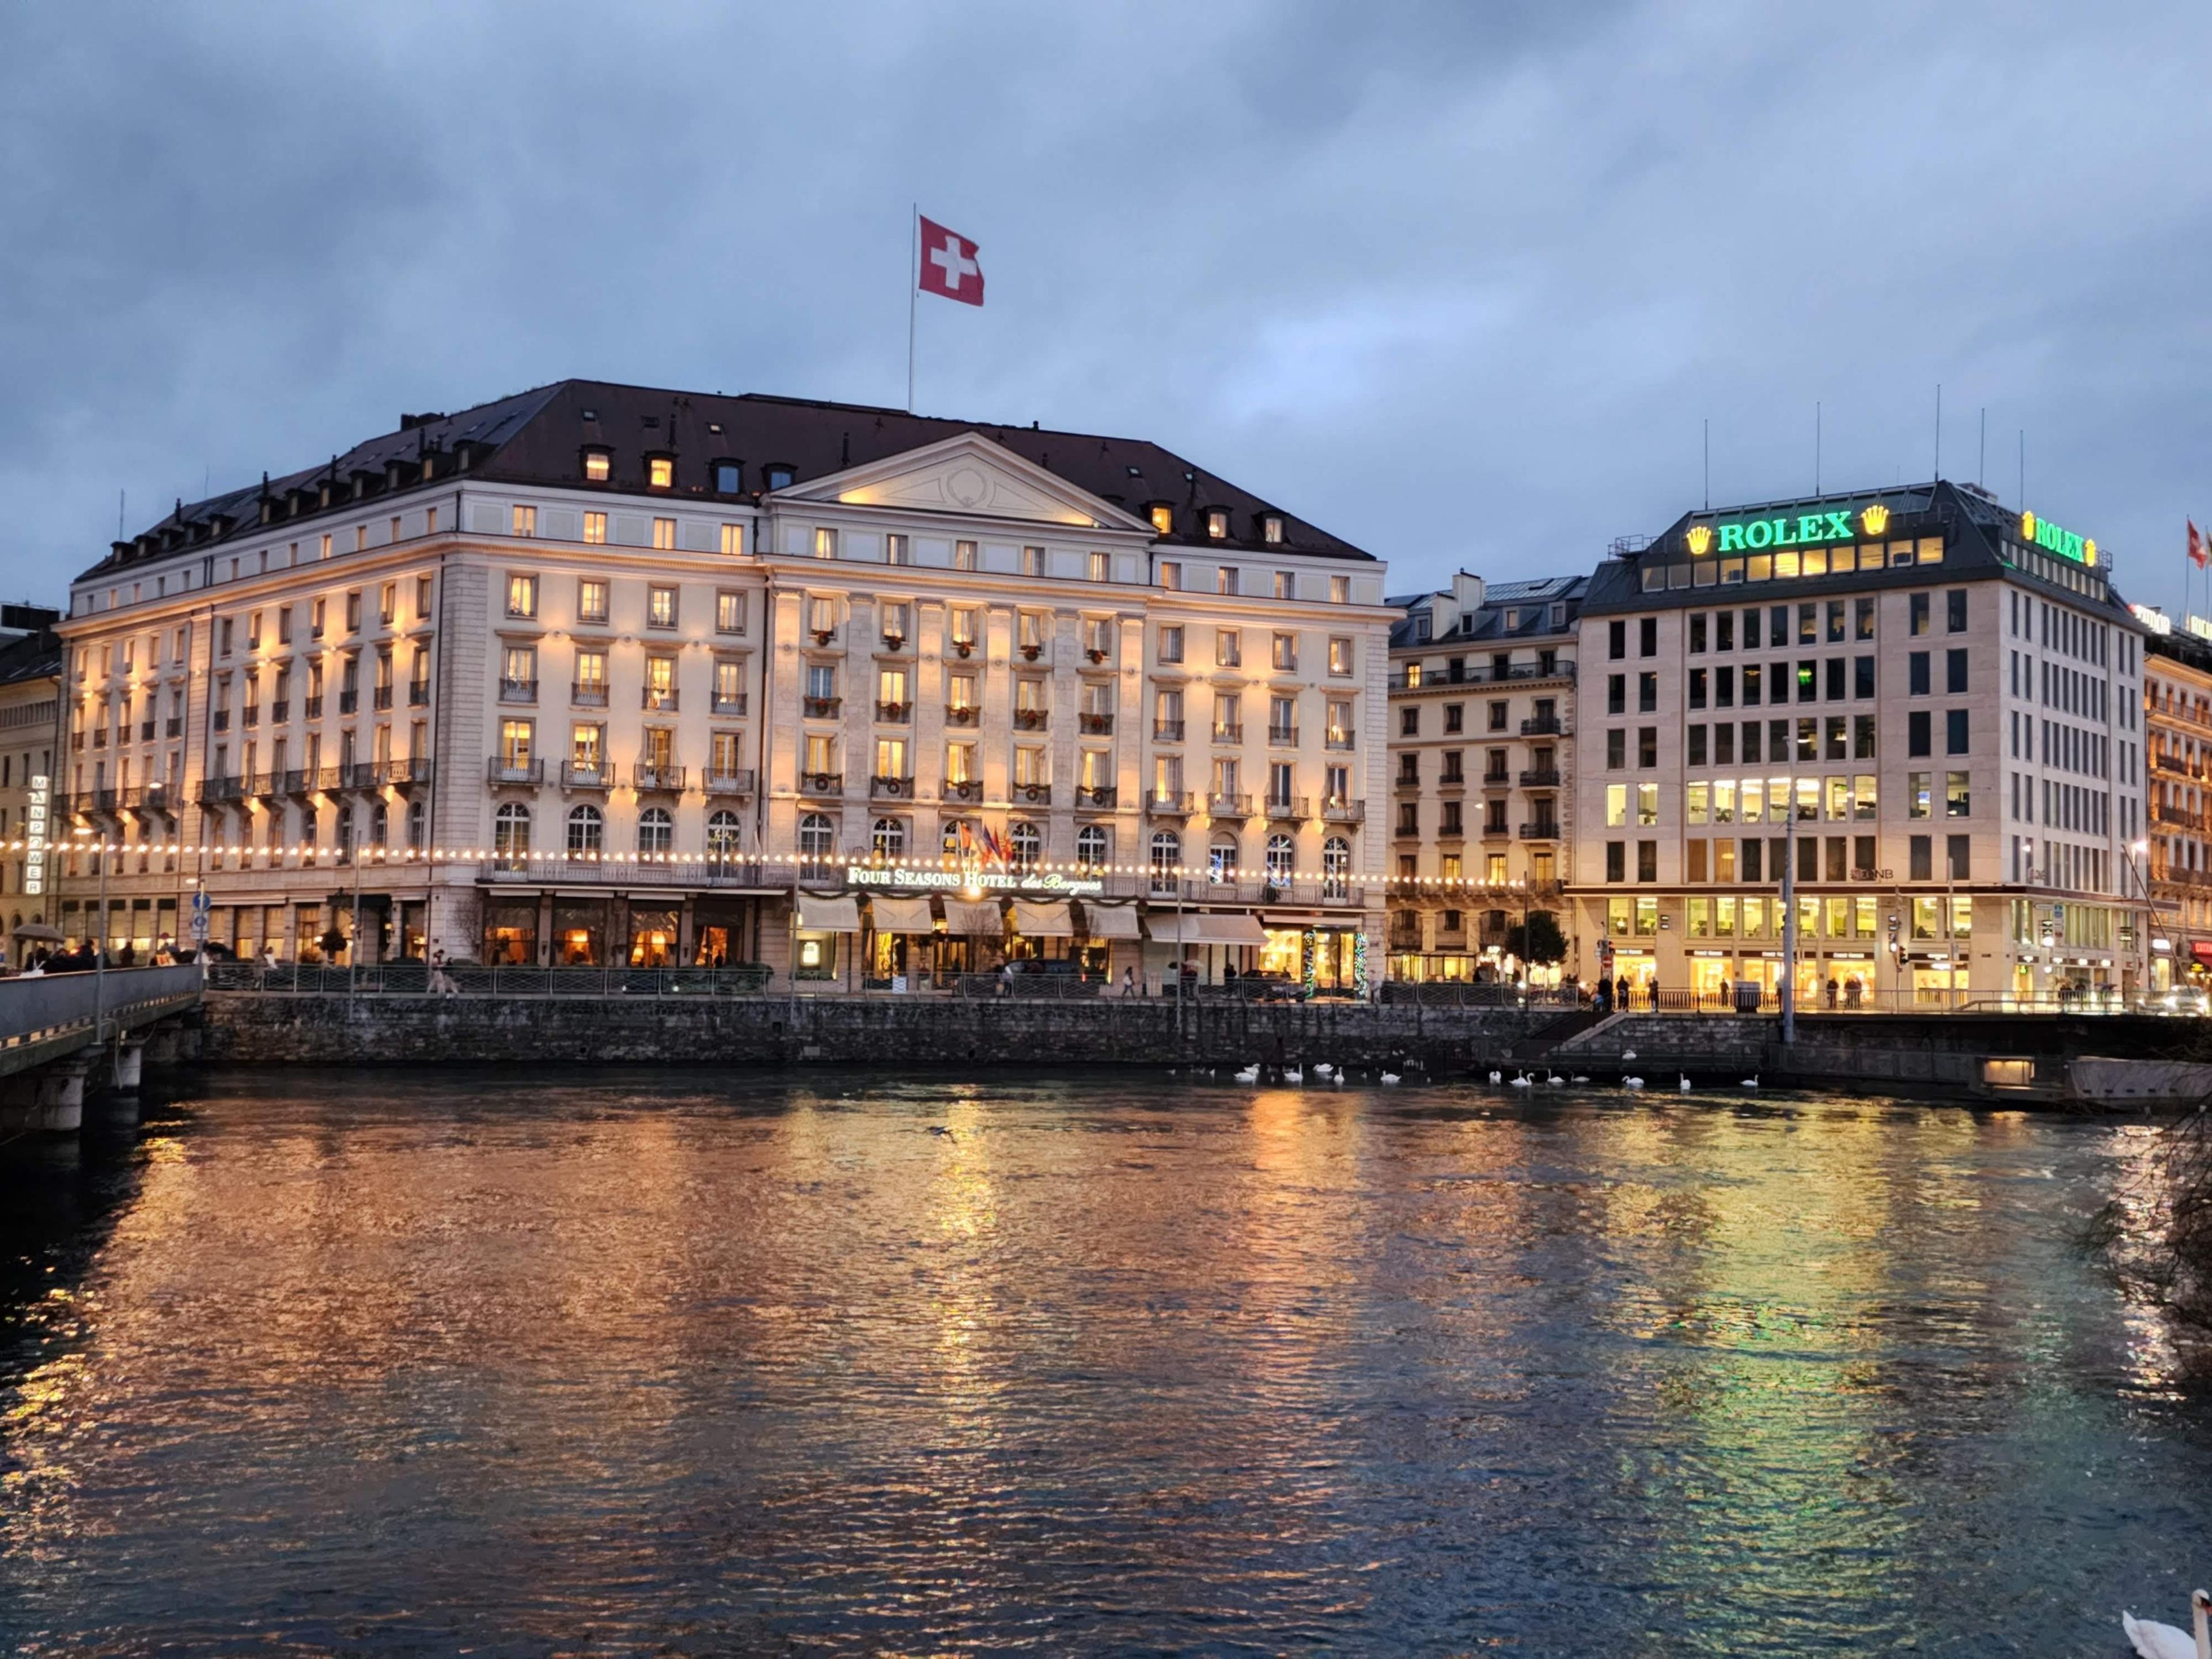 Four Seasons Hotel des Bergues - Geneva, Switzerland